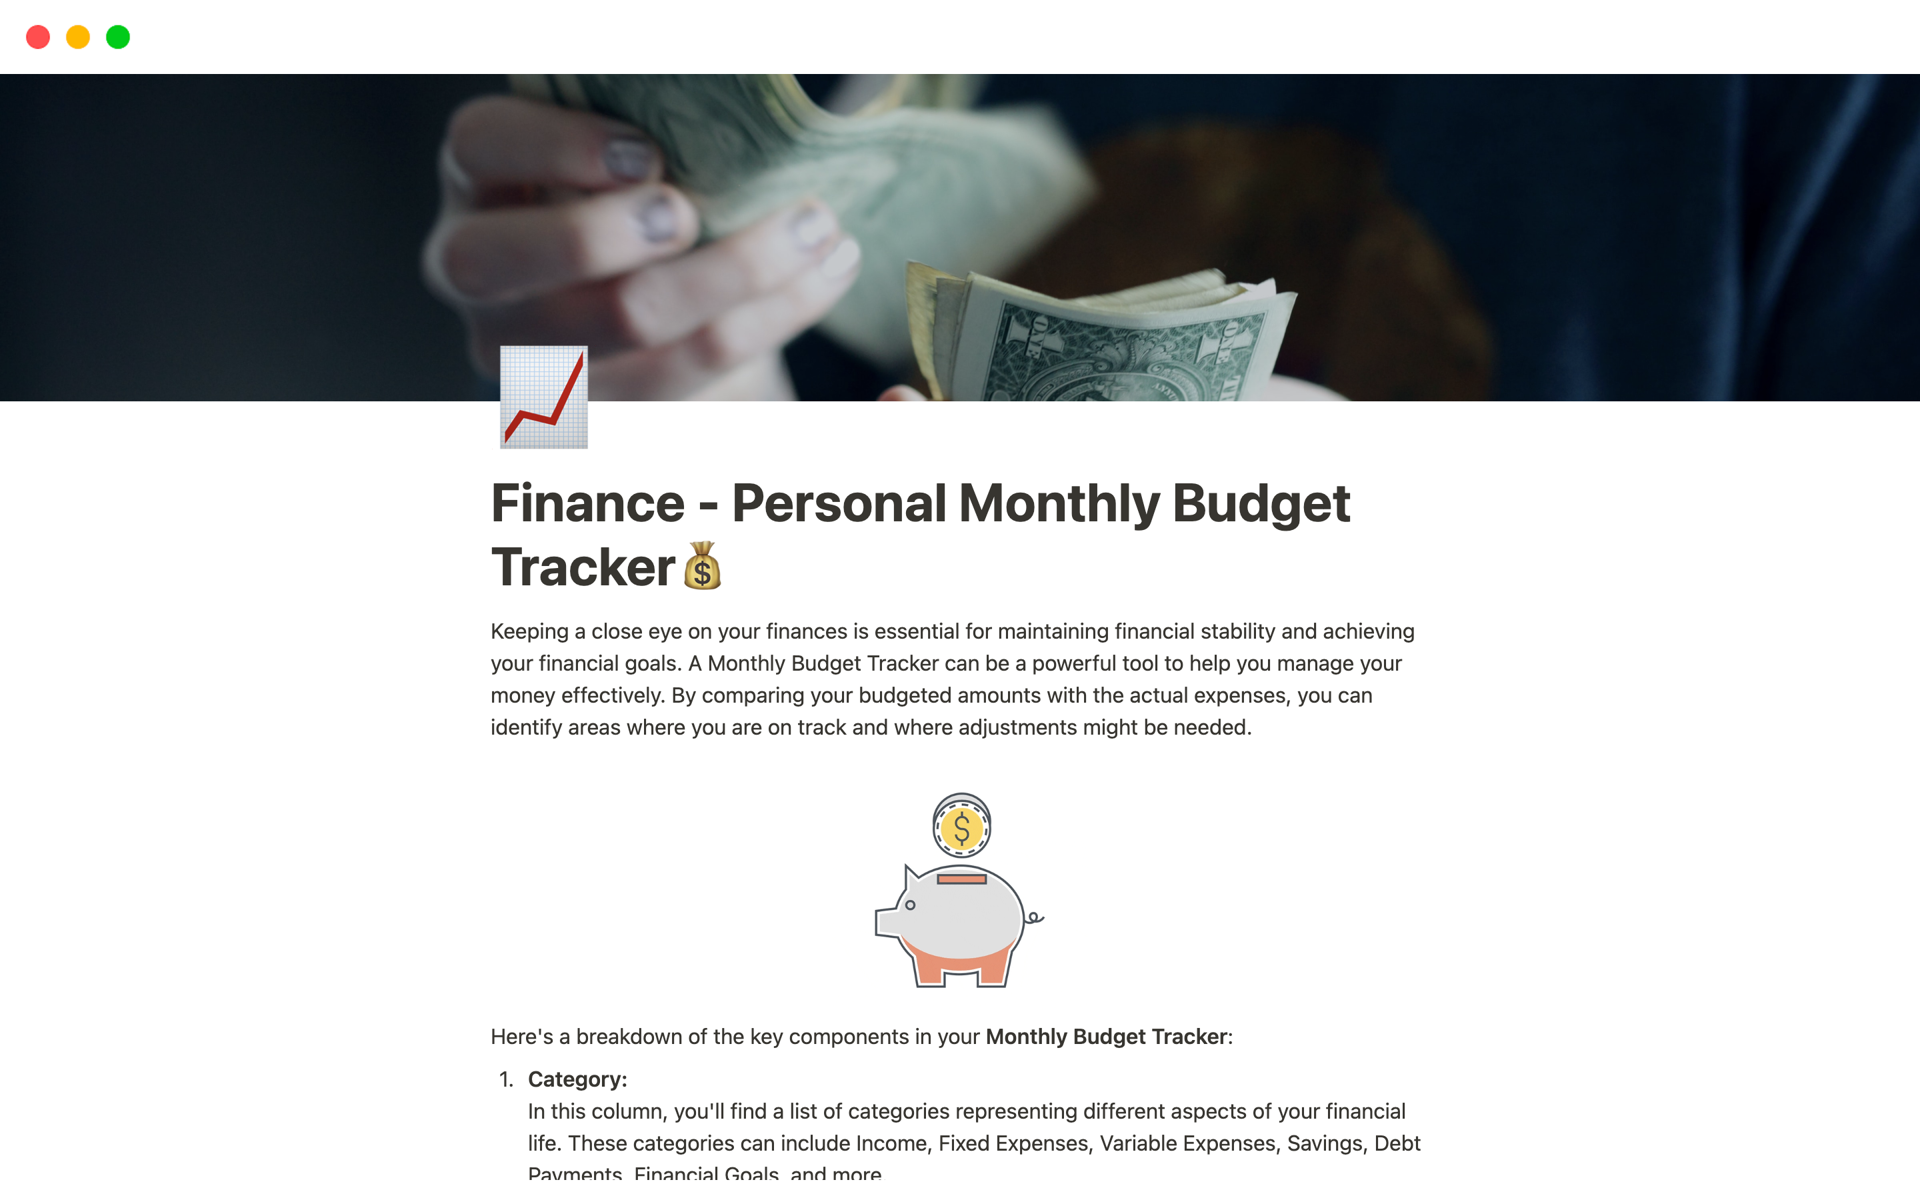 Aperçu du modèle de Finance - Personal Monthly Budget Tracker